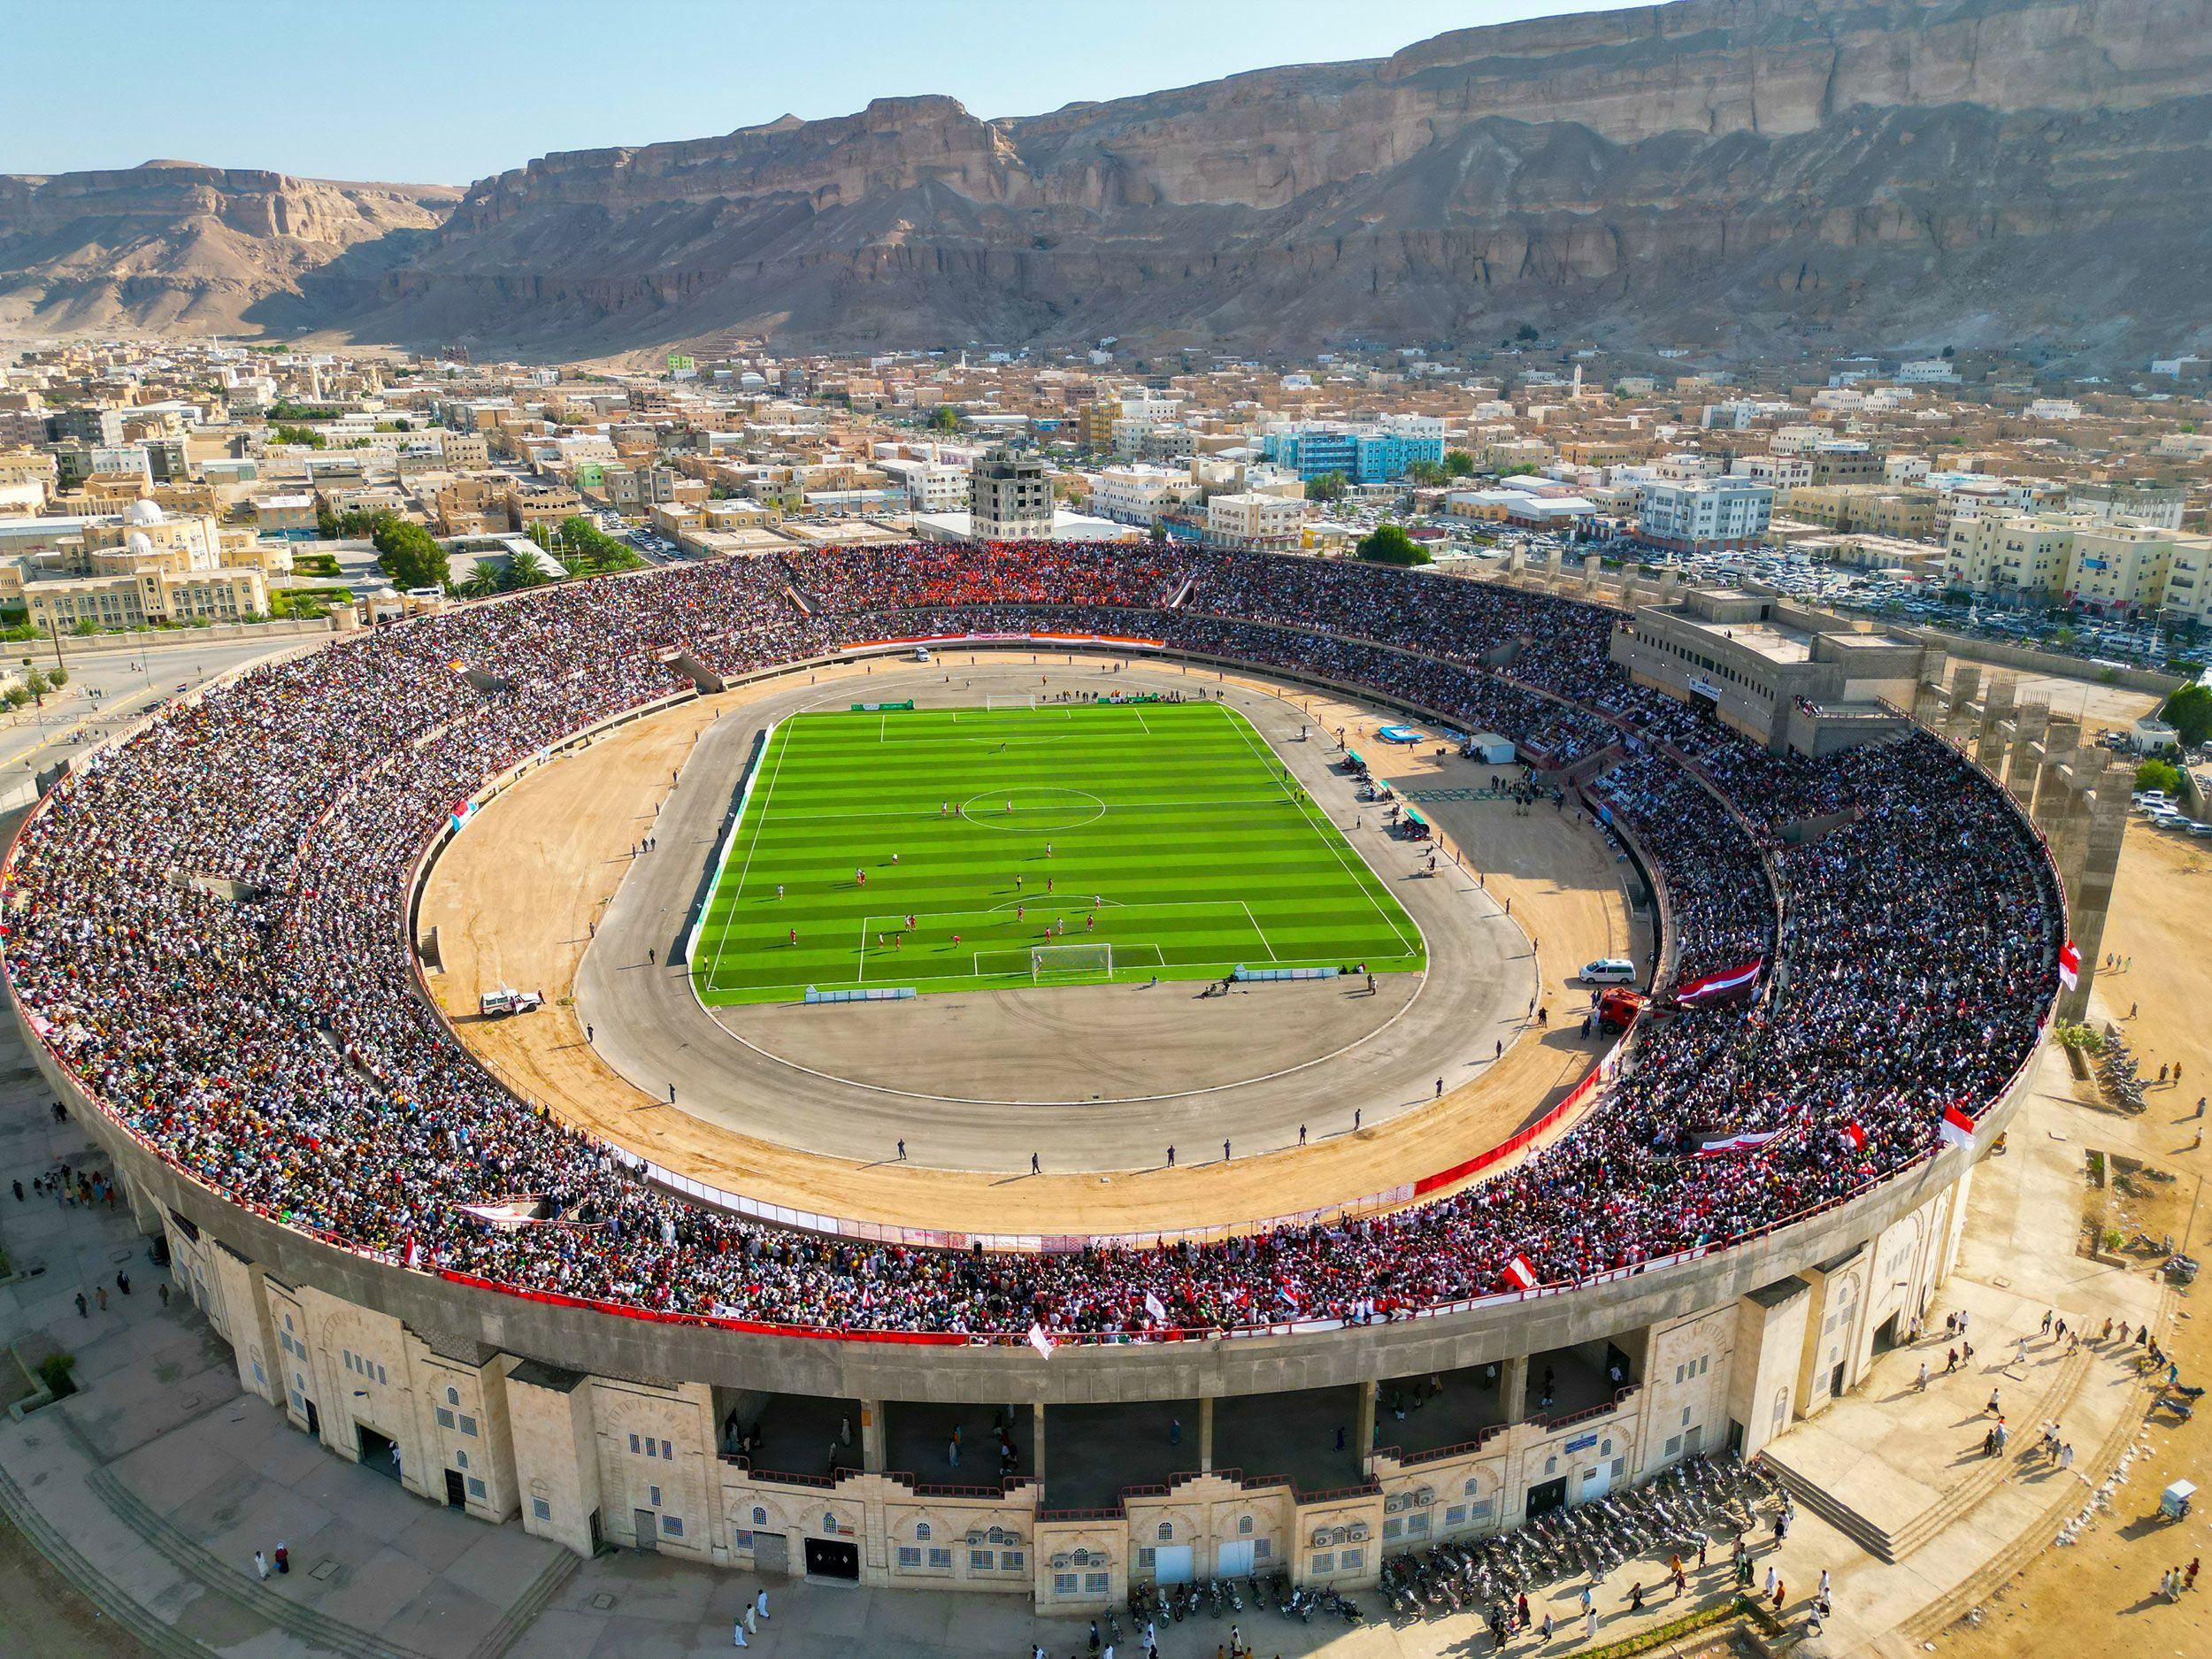 Yemen: The football match that gave 'some enjoyment' to war-torn country | CNN